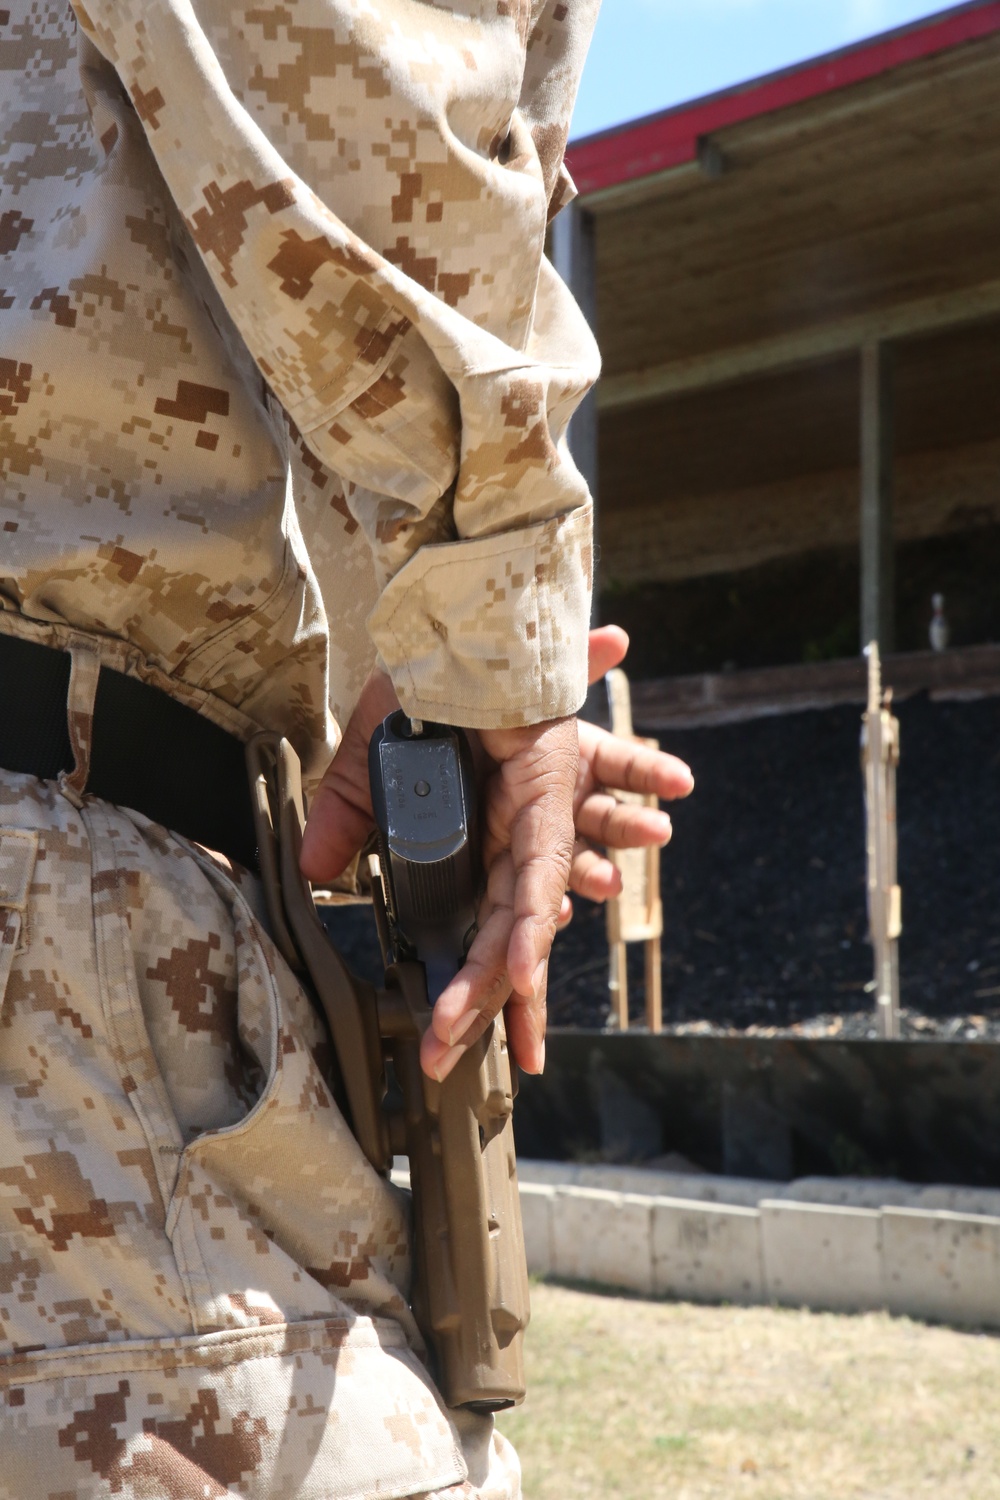 Marine fire pistols at Kaneohe Bay Range Training Facility